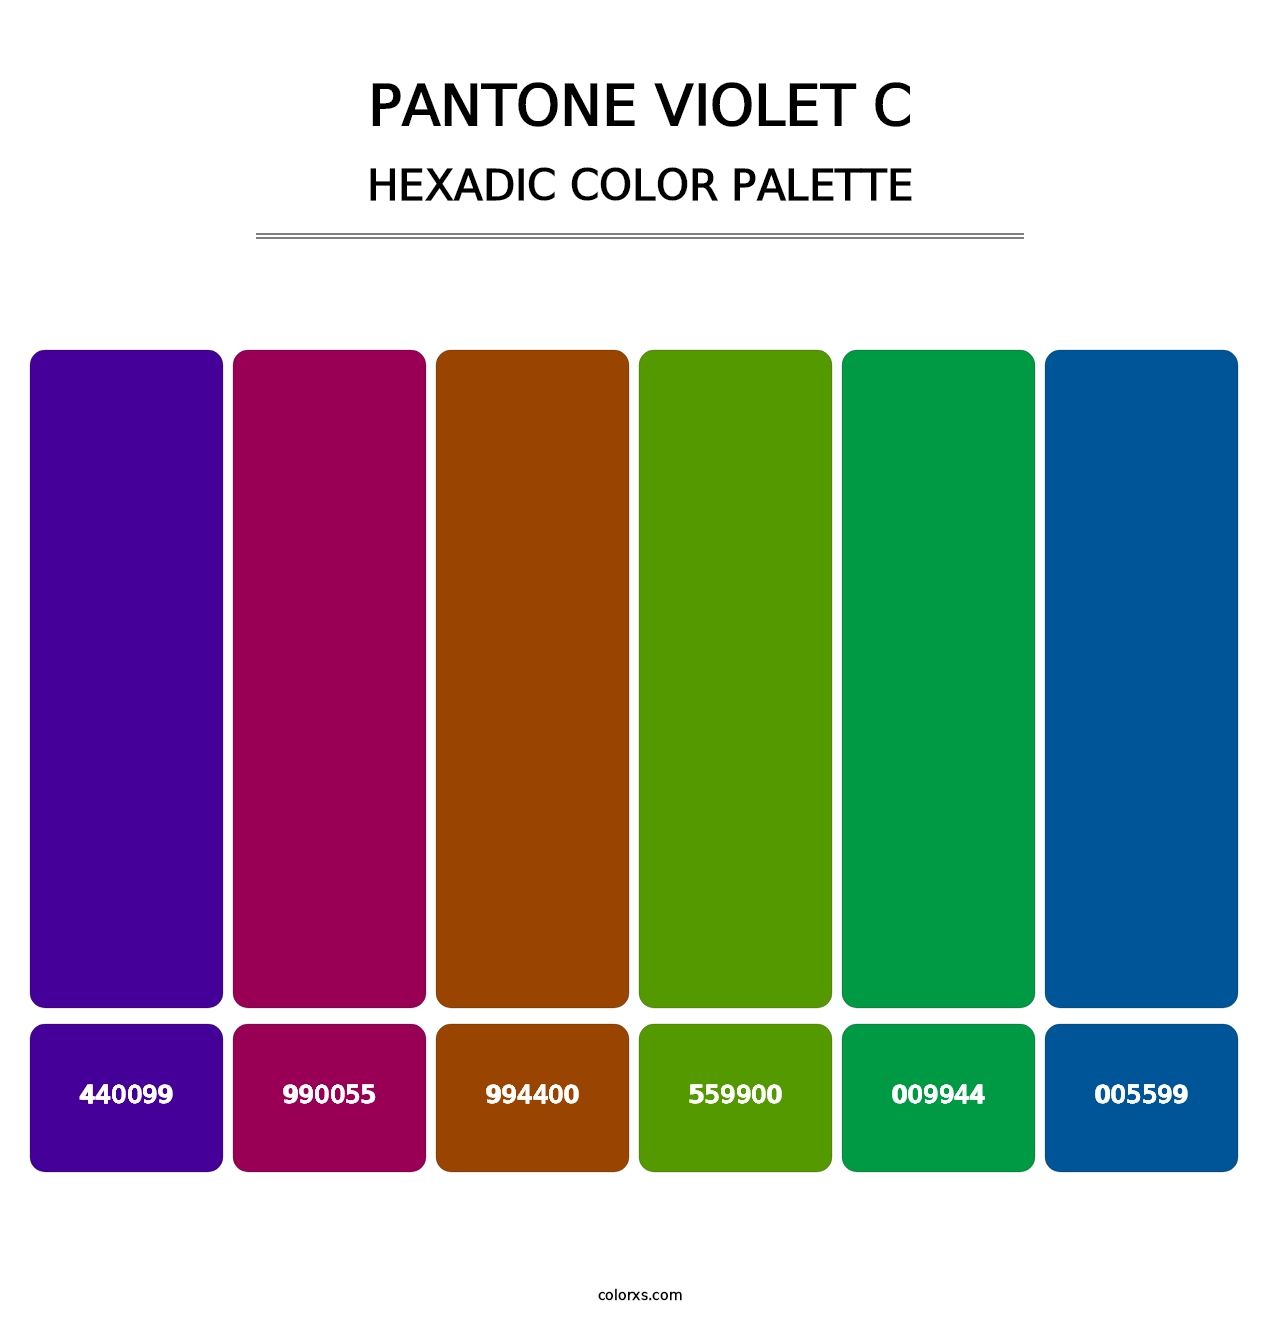 PANTONE Violet C - Hexadic Color Palette